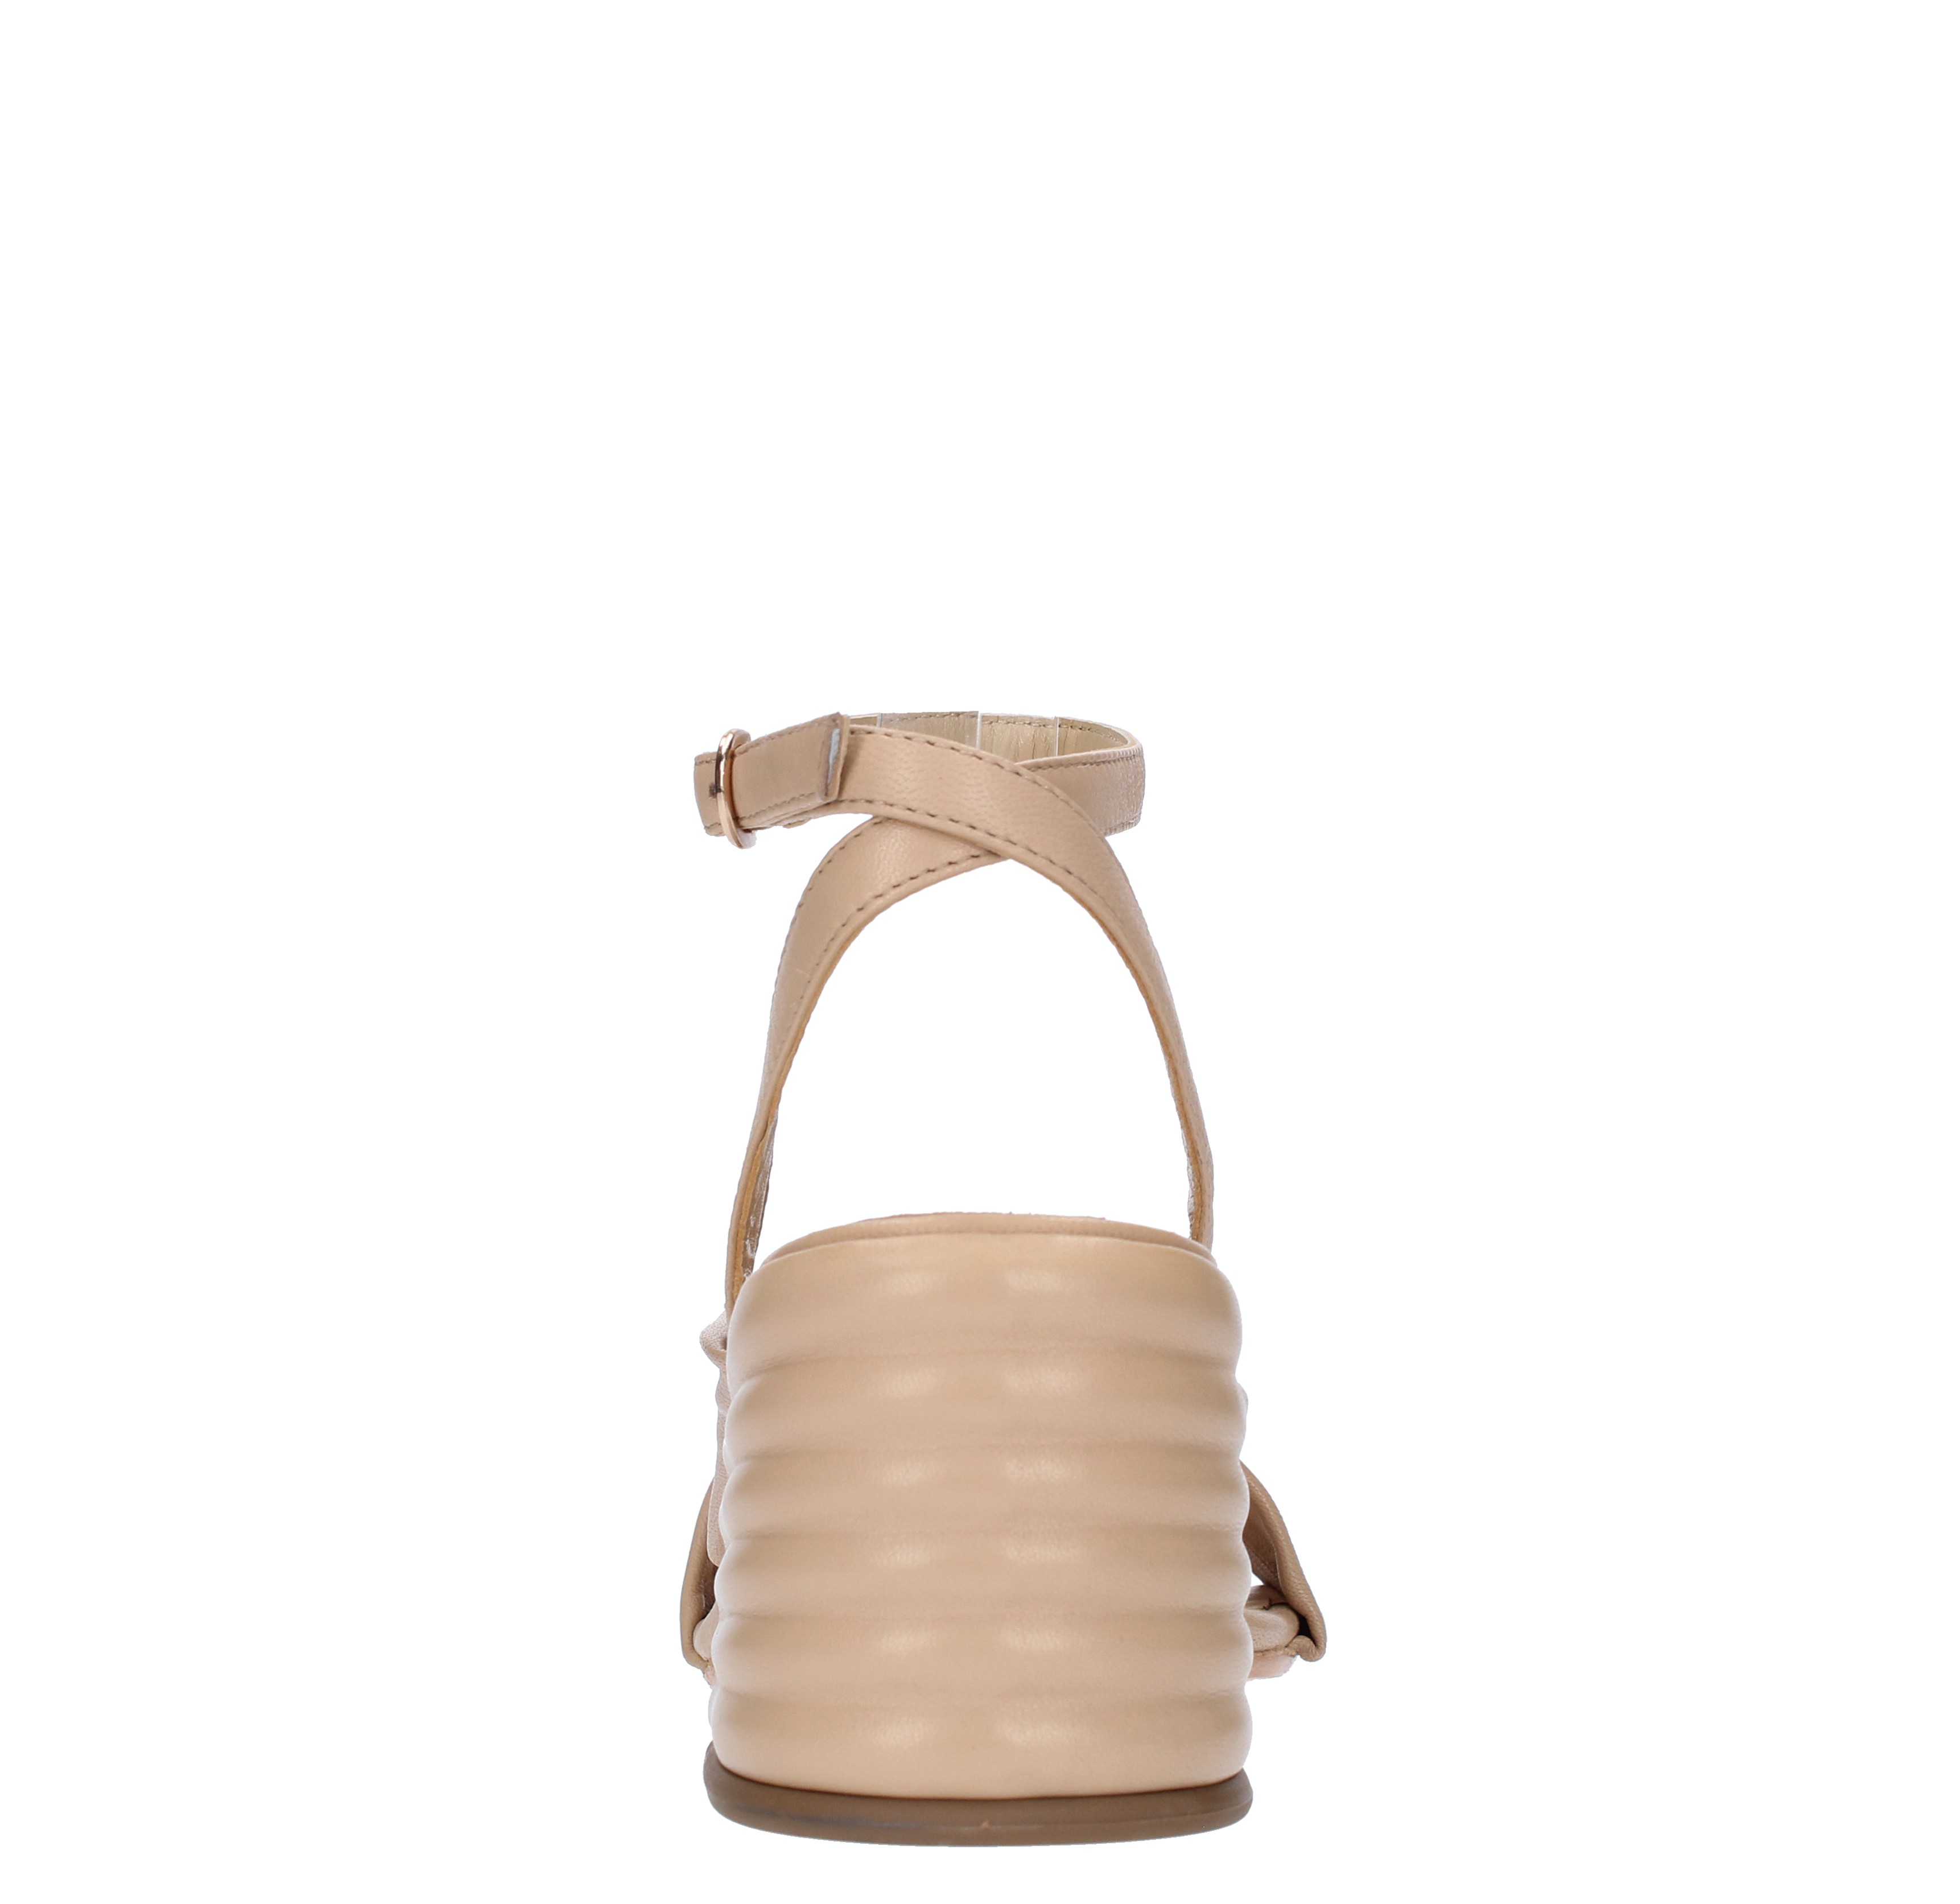 Nappa leather sandals - EMANUELLE VEE - Ginevra calzature